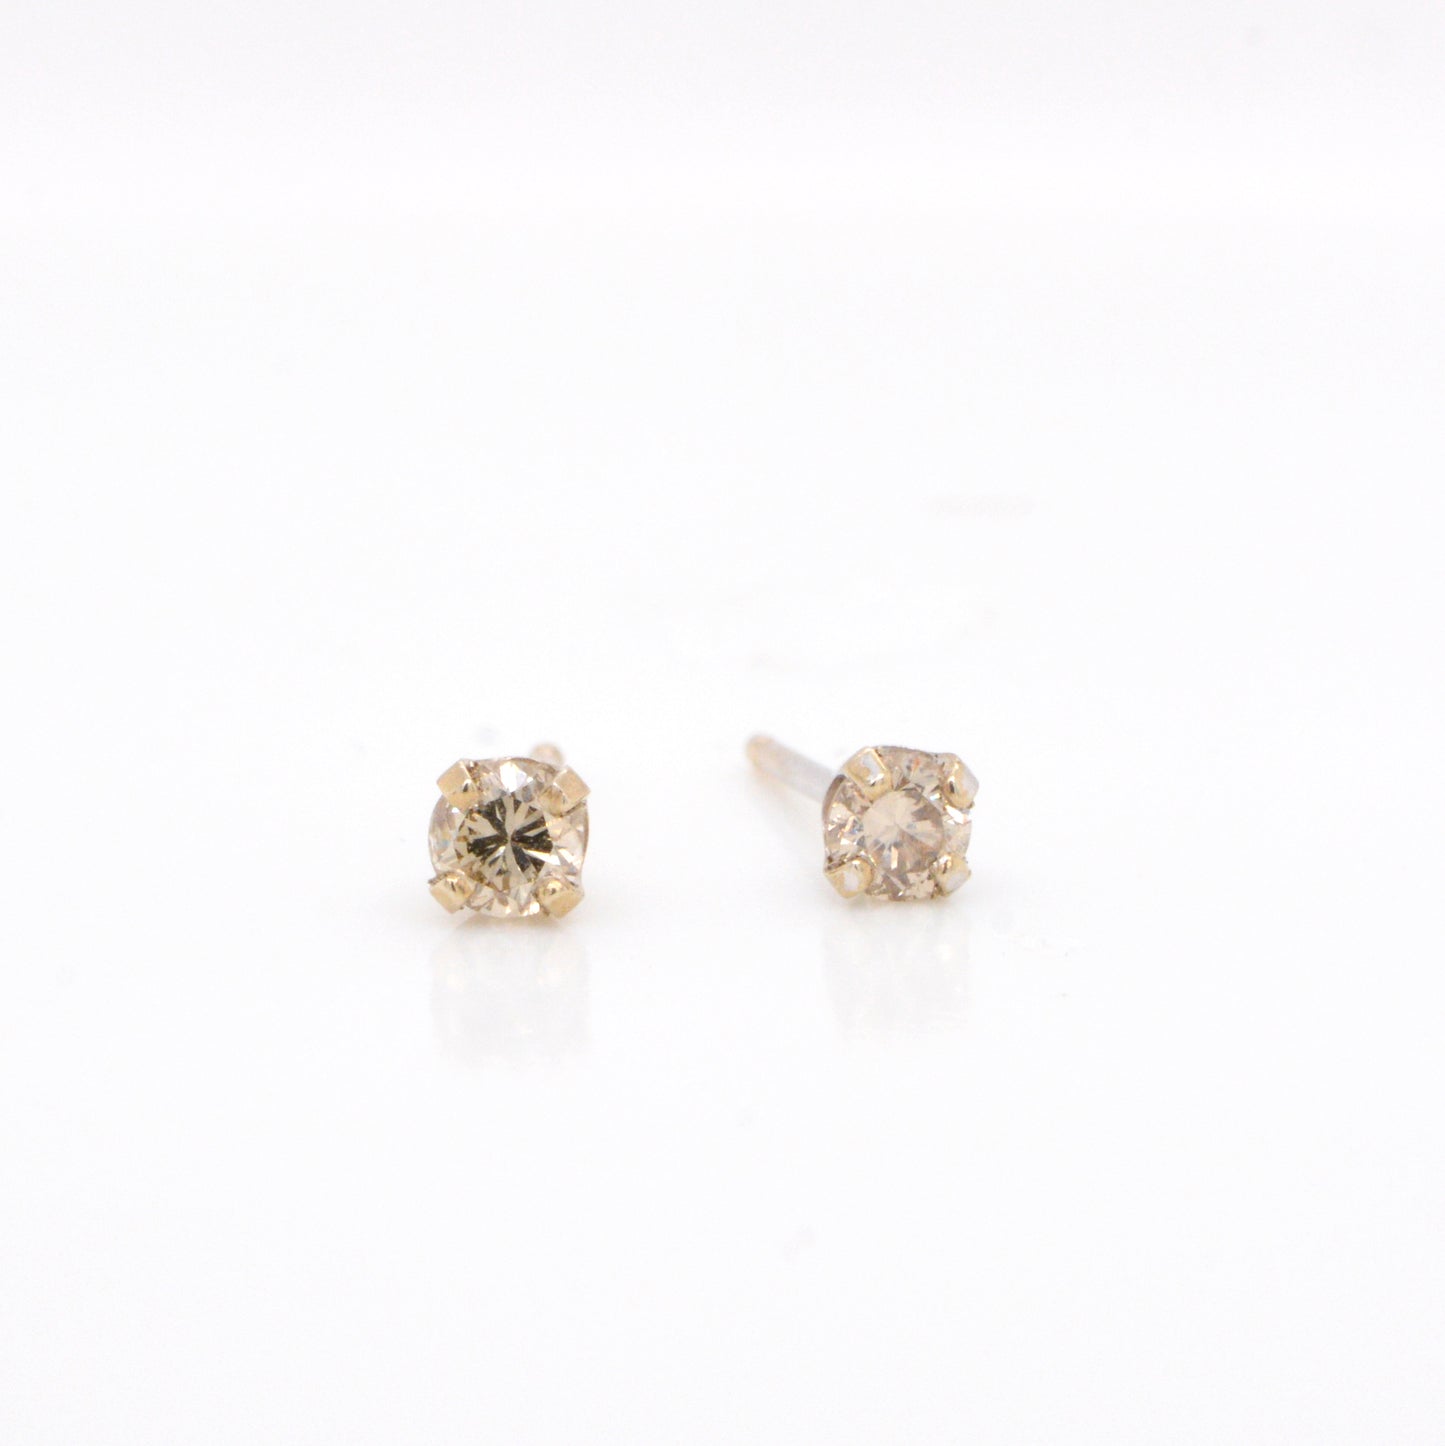 White Gold Champagne Diamond Stud Earrings